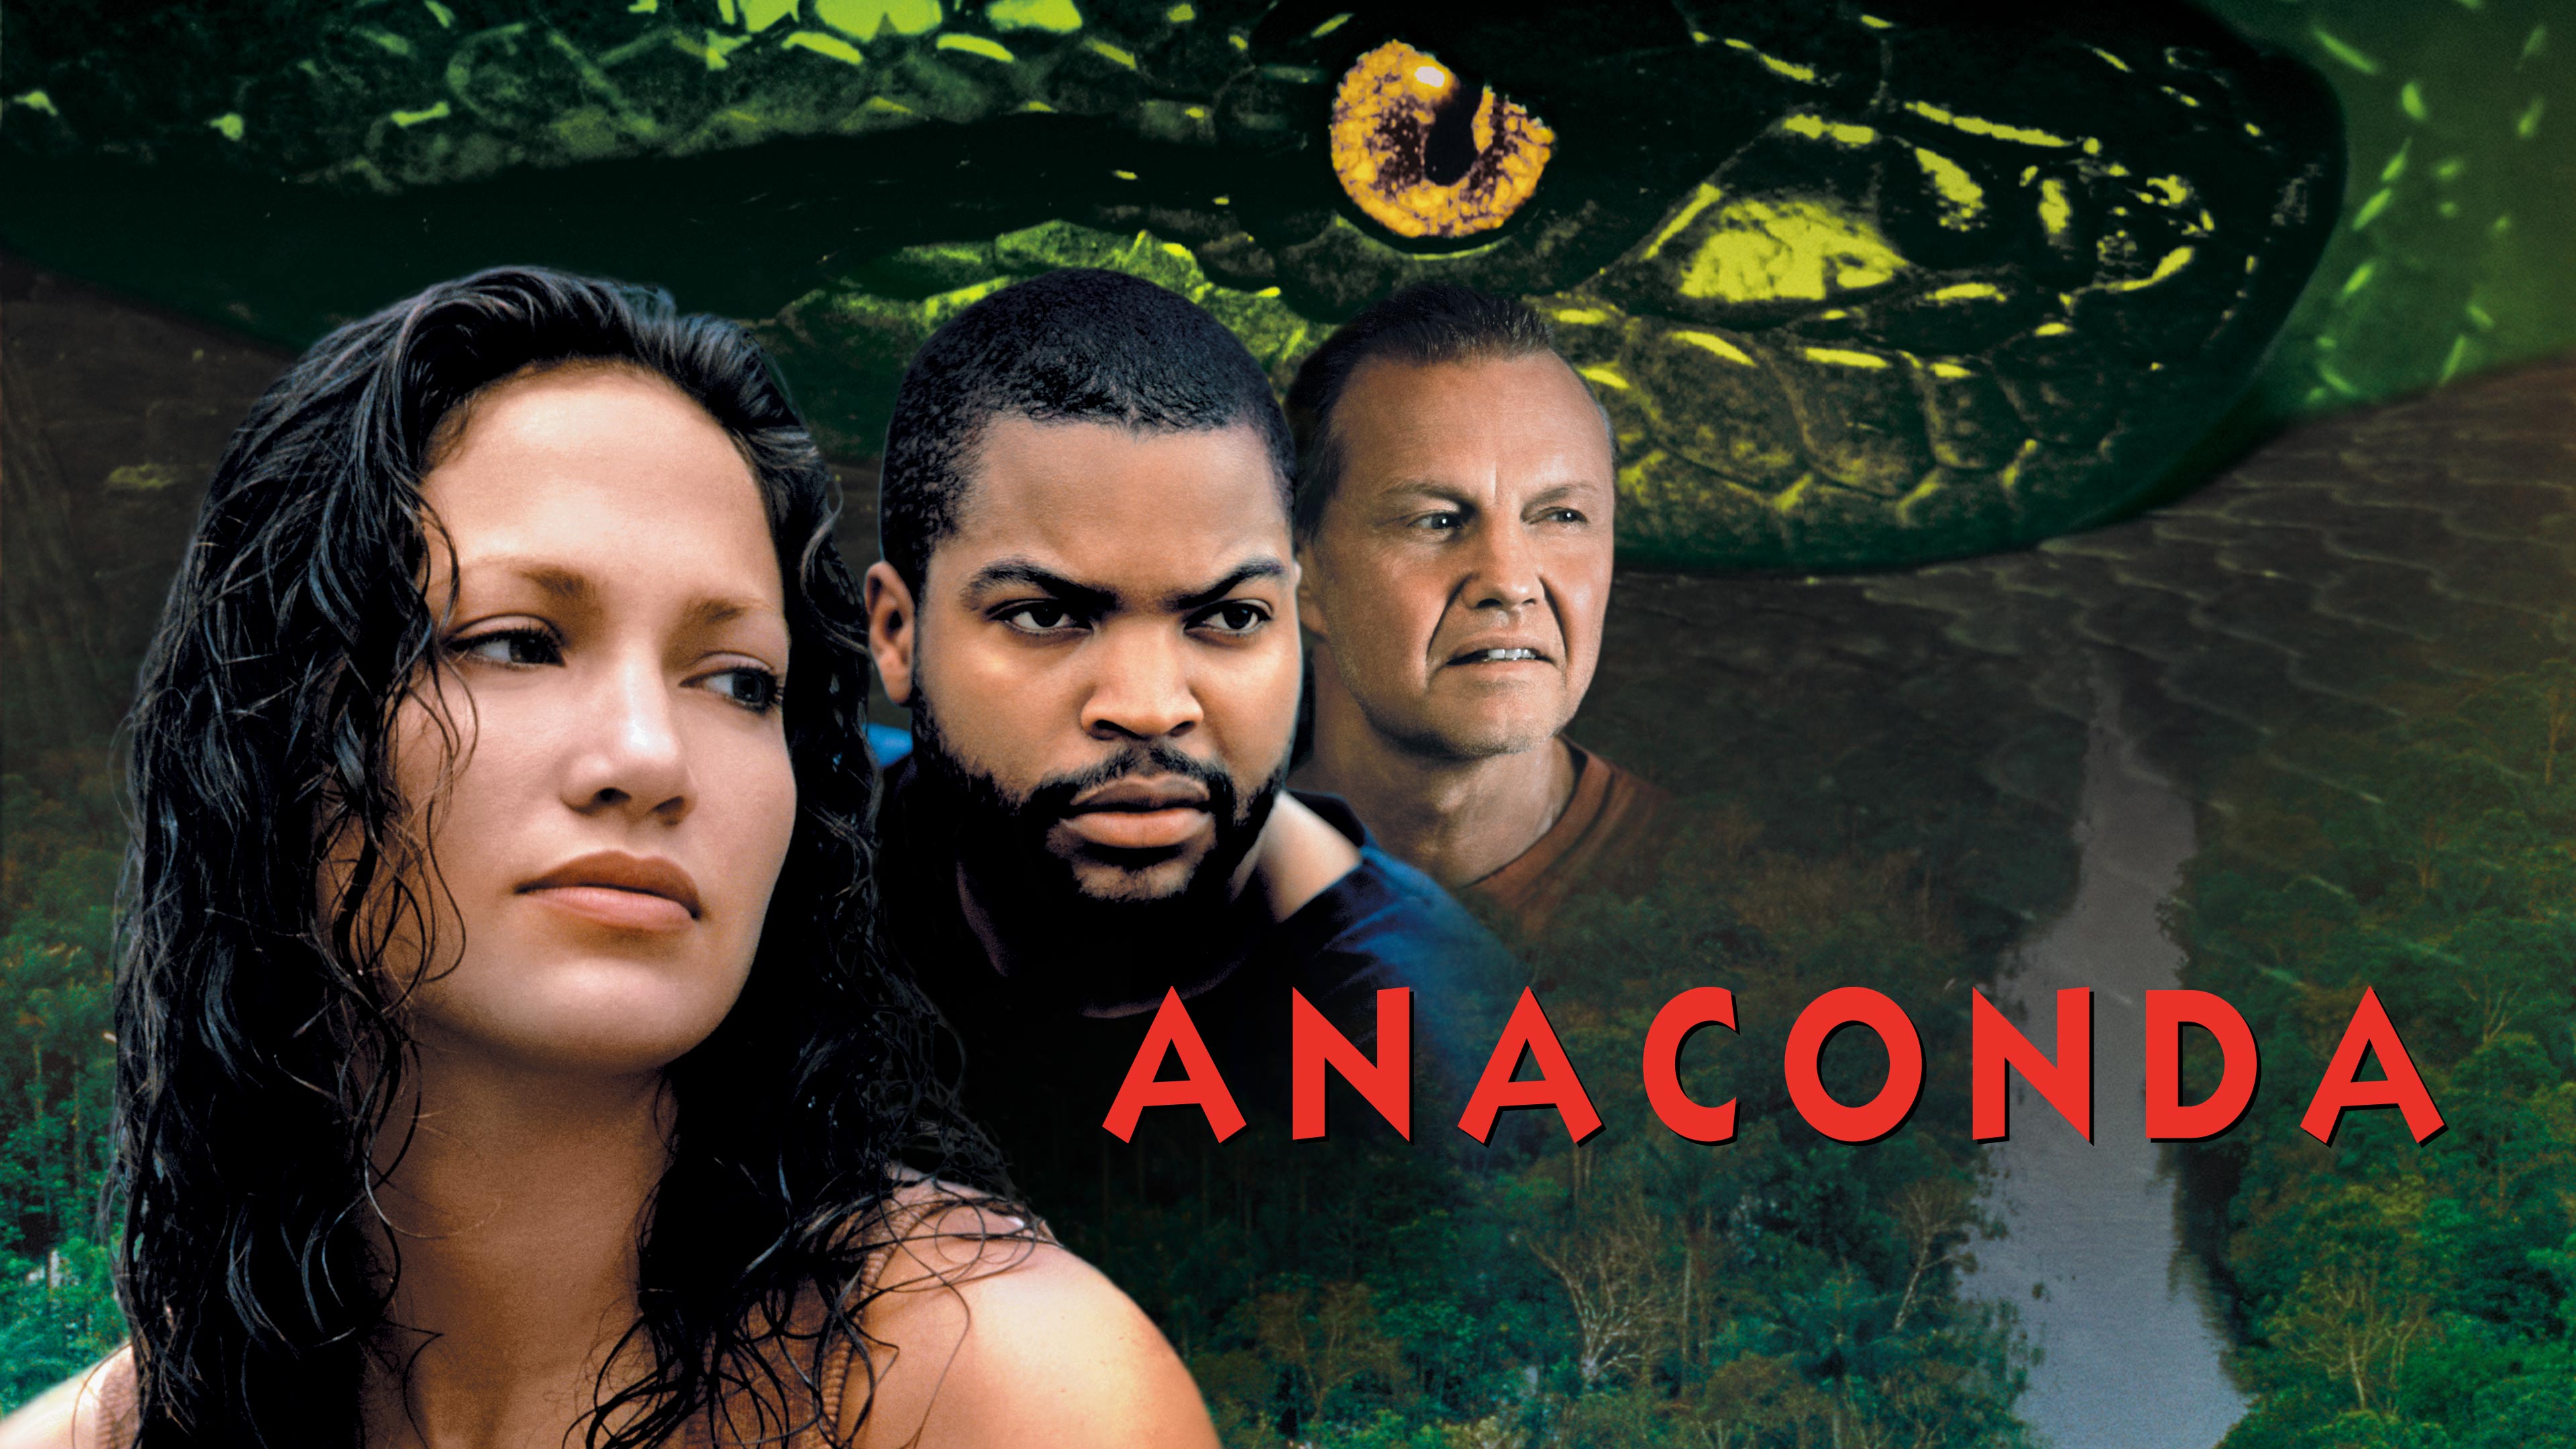 Watch Anaconda Online | Stream Full Movies